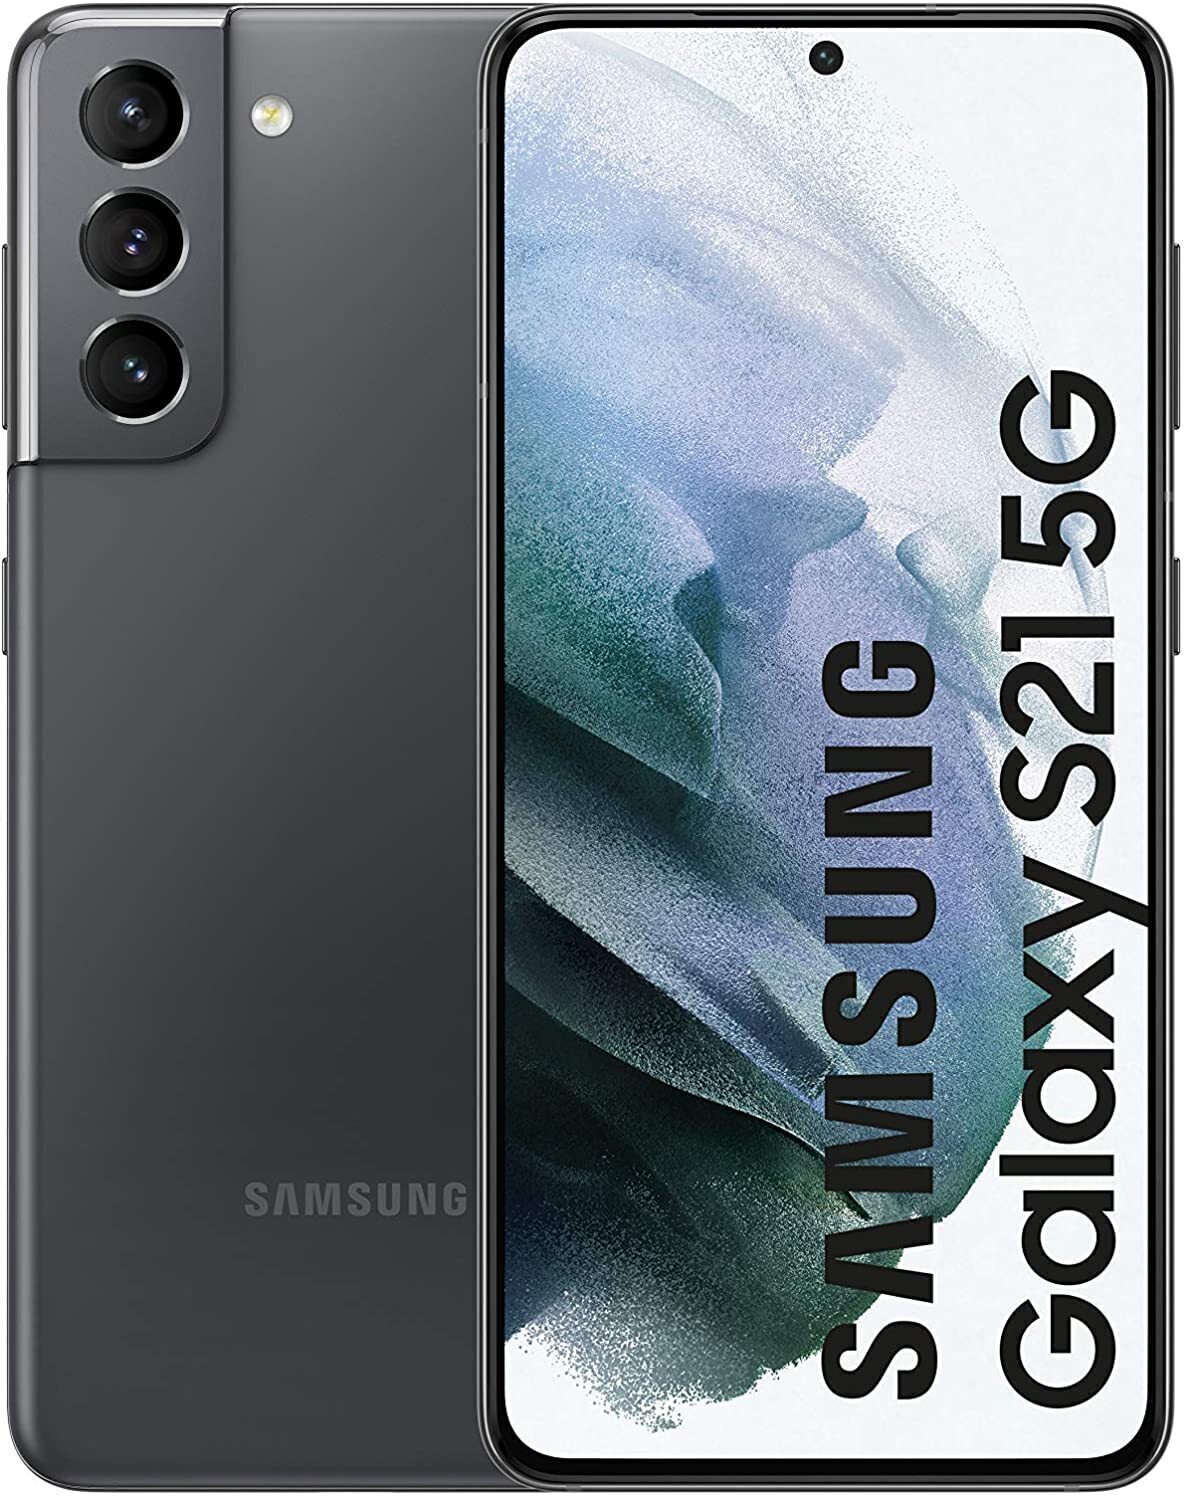  Samsung Galaxy S21 5G, Factory Unlocked Android Cell Phone, International Version 5G Smartphone, Pro-Grade Camera, 8K Video, 64MP High  Res